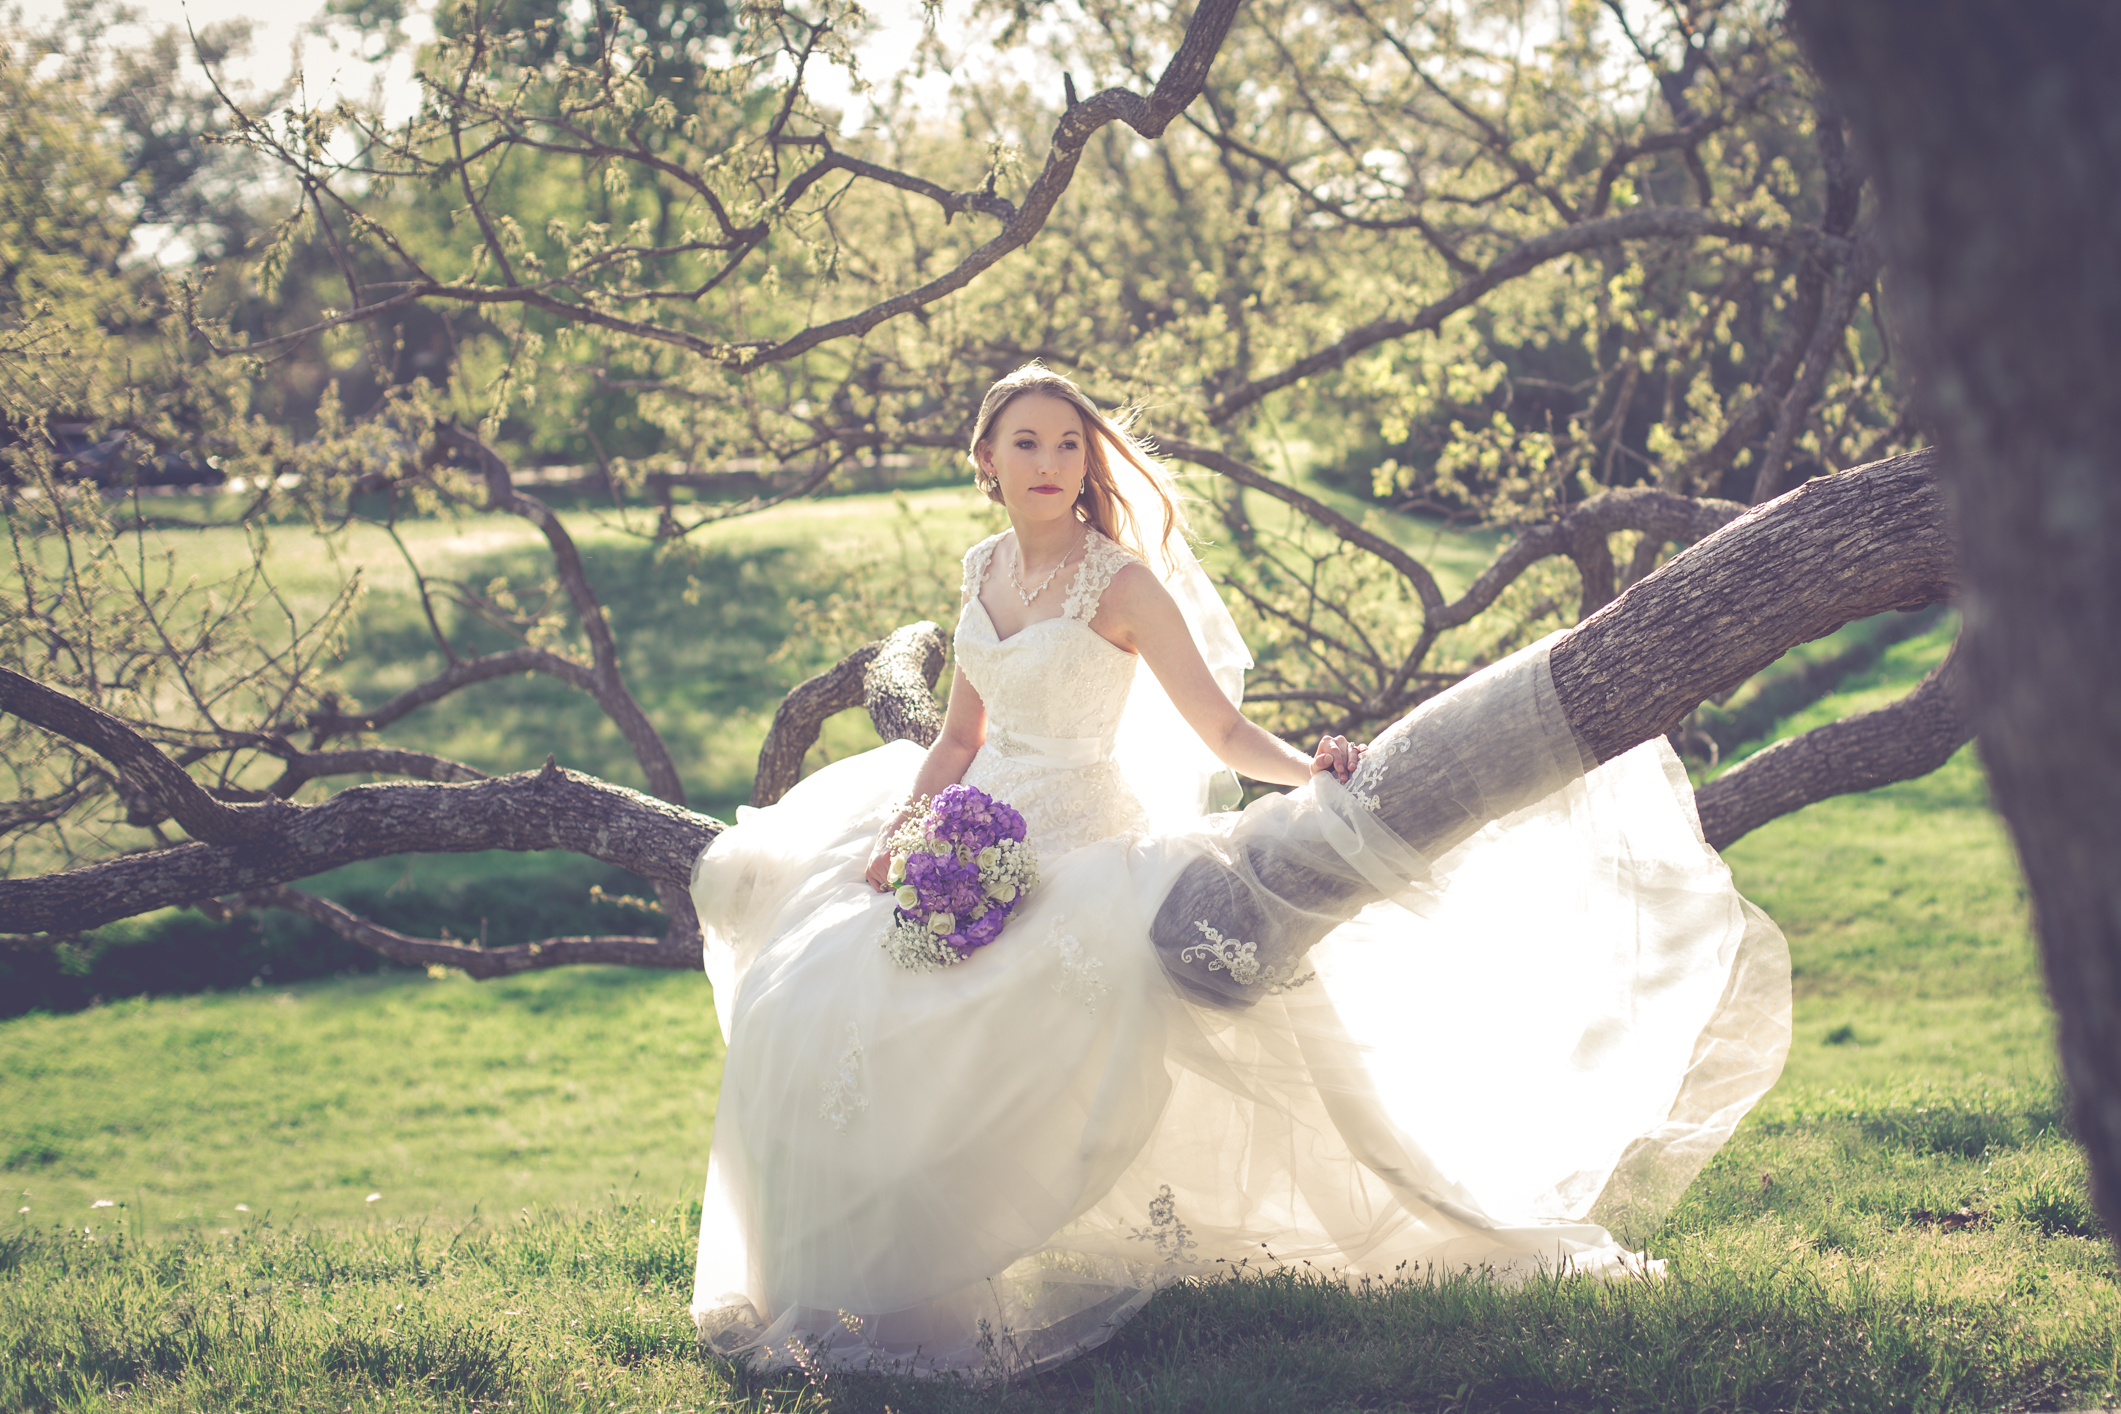 Brison Park Bride Lori Blythe Photography